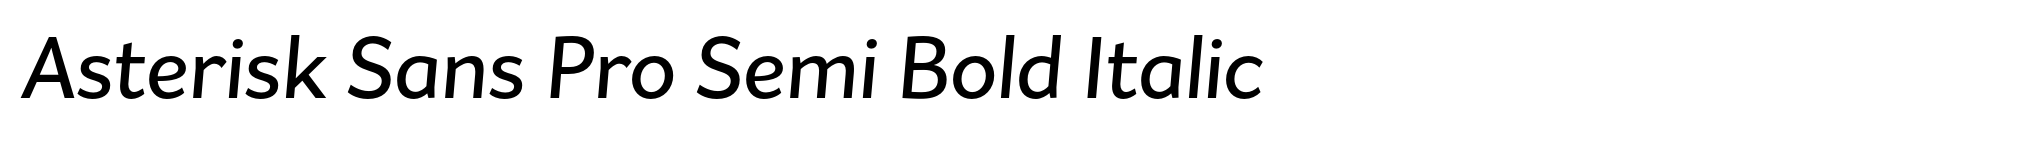 Asterisk Sans Pro Semi Bold Italic image